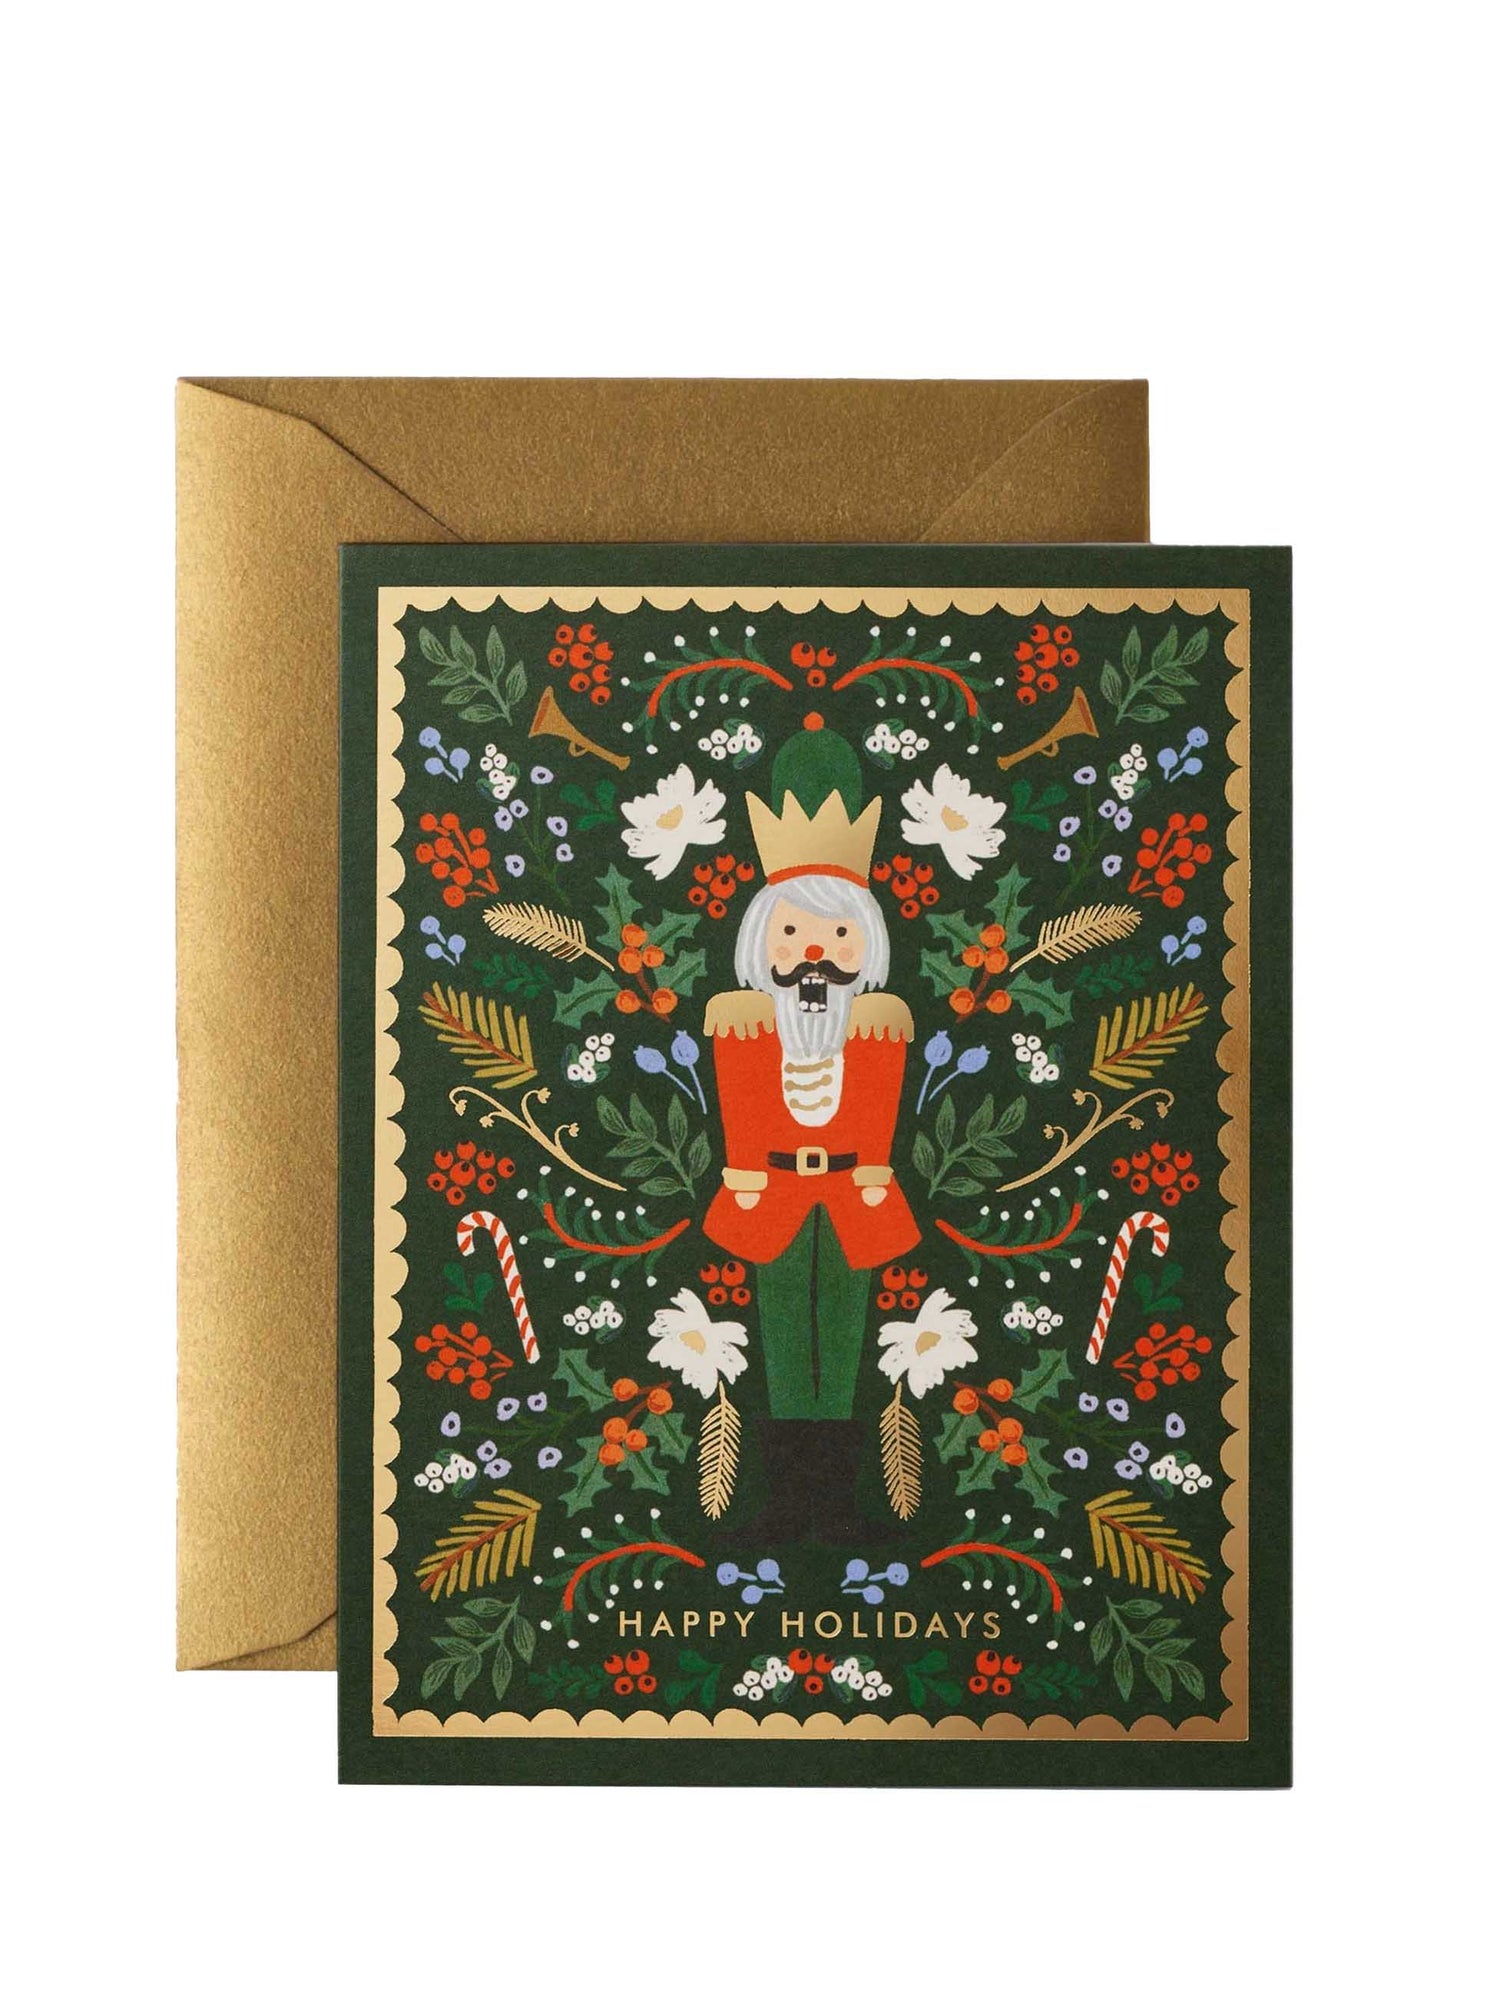 Evergreen Nutcracker Christmas card